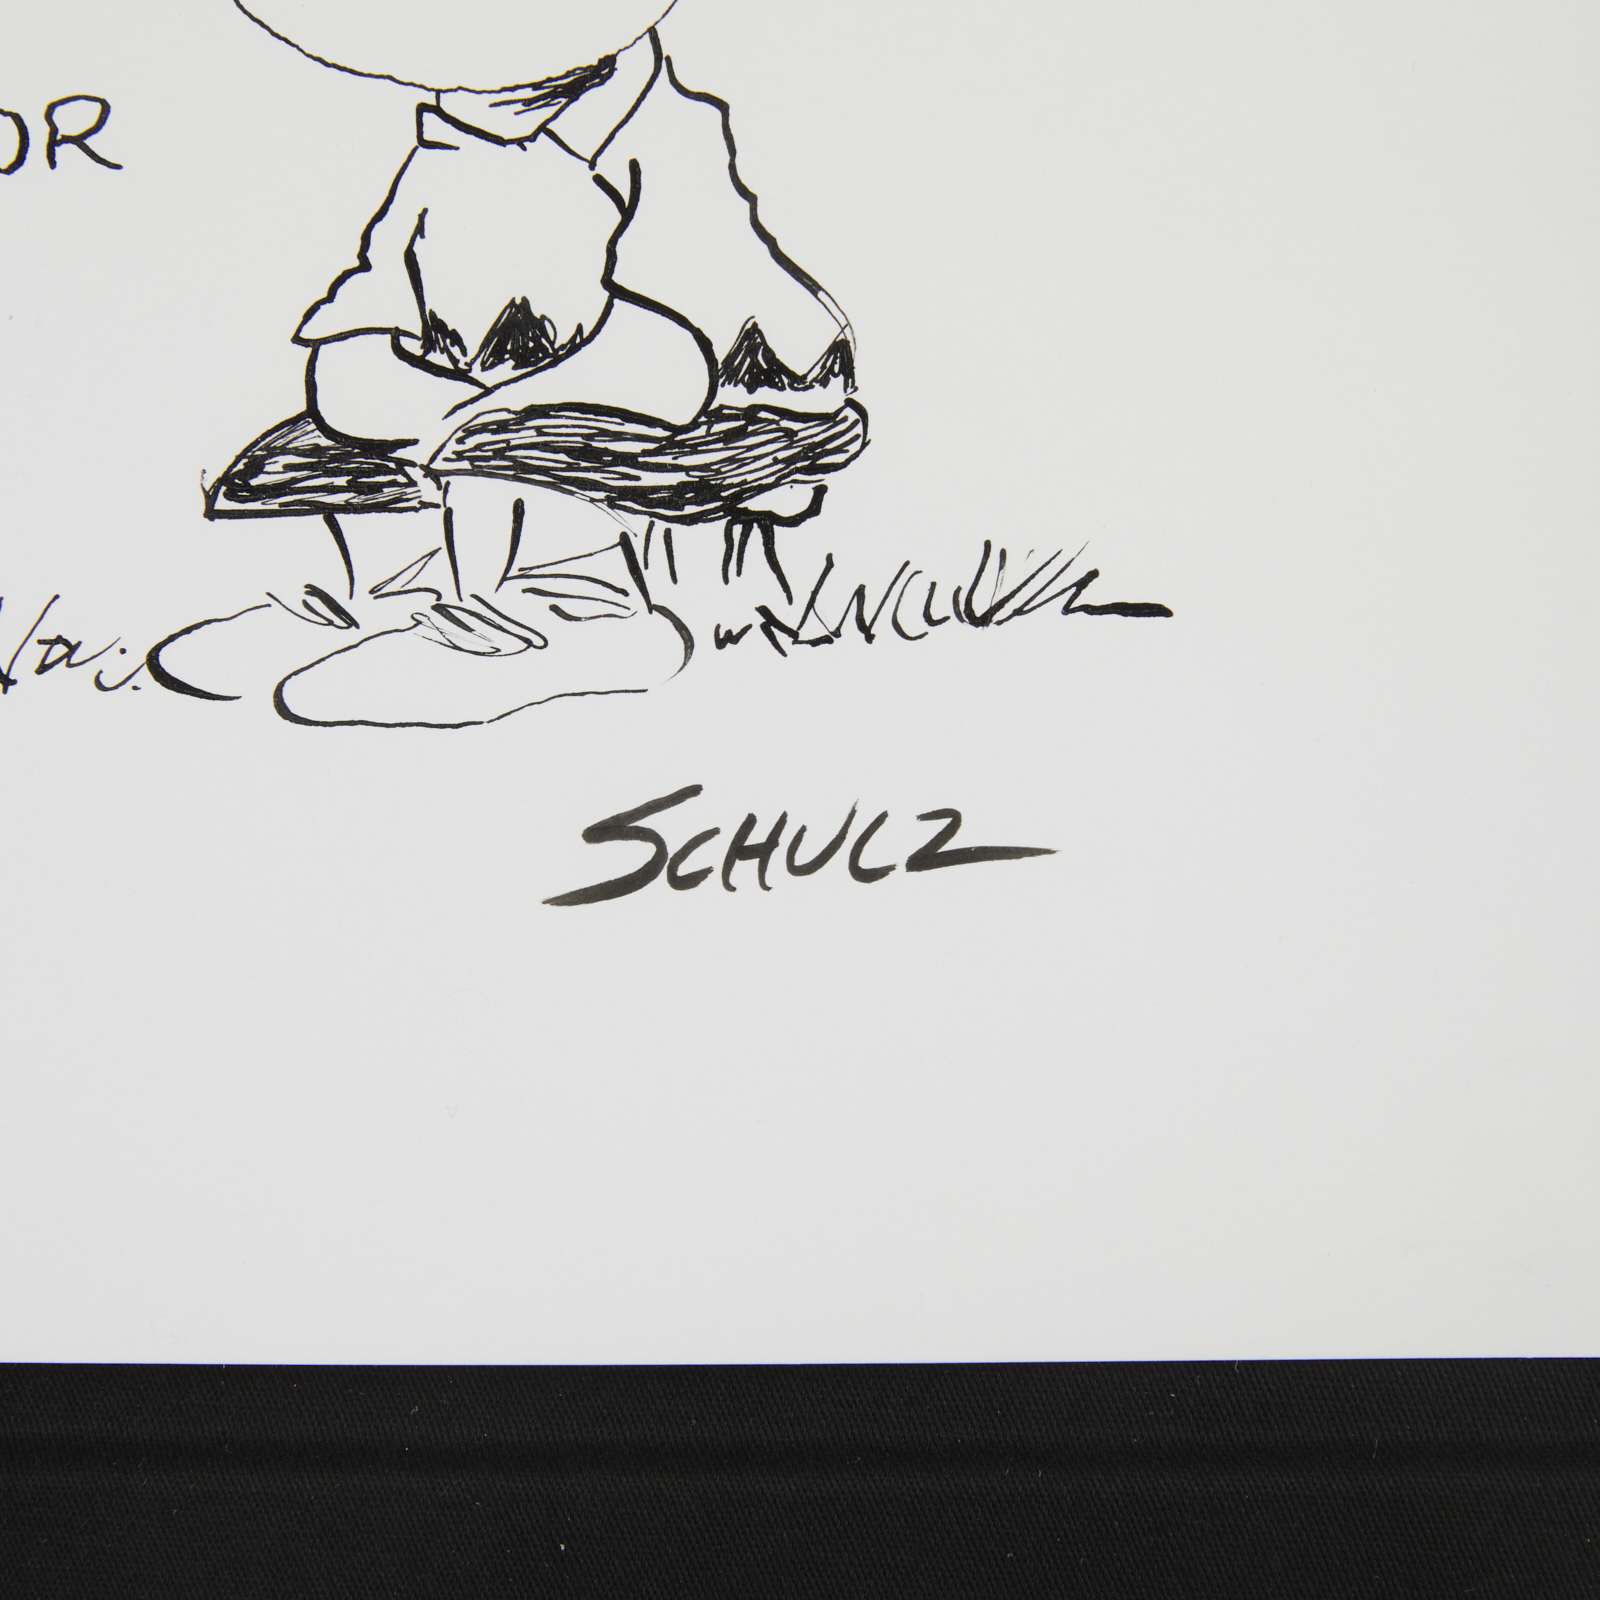 Charles Schulz Original Peanuts Drawing - Image 2 of 6